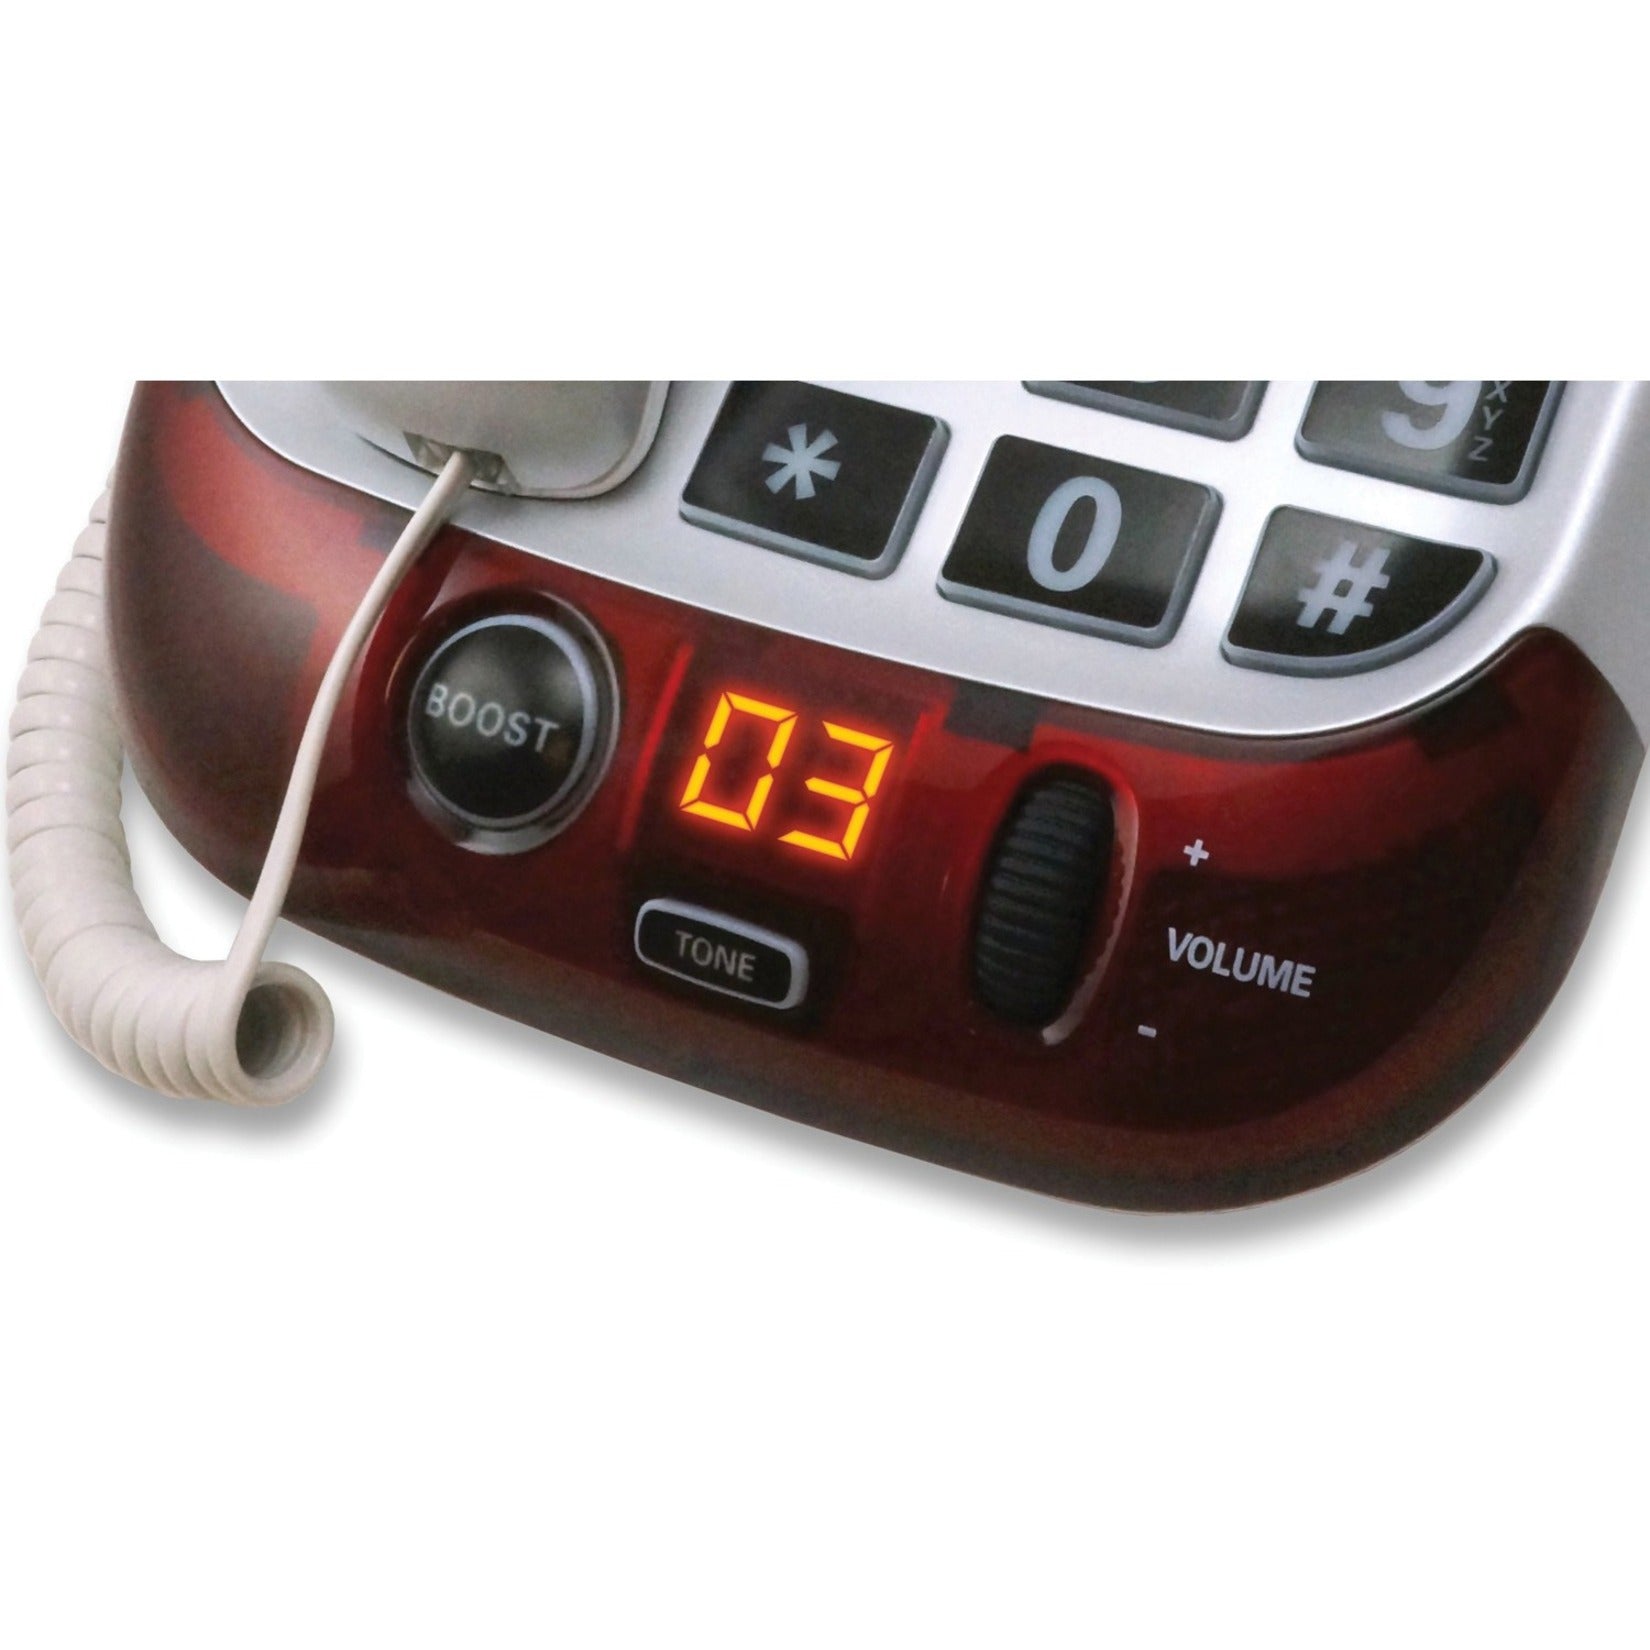 Clarity 54005.001 Alto Digital Extra Loud Big Button Speakerphone, Visual Ringer, Talking Caller ID, Talking Keypad, Power Failure Protection